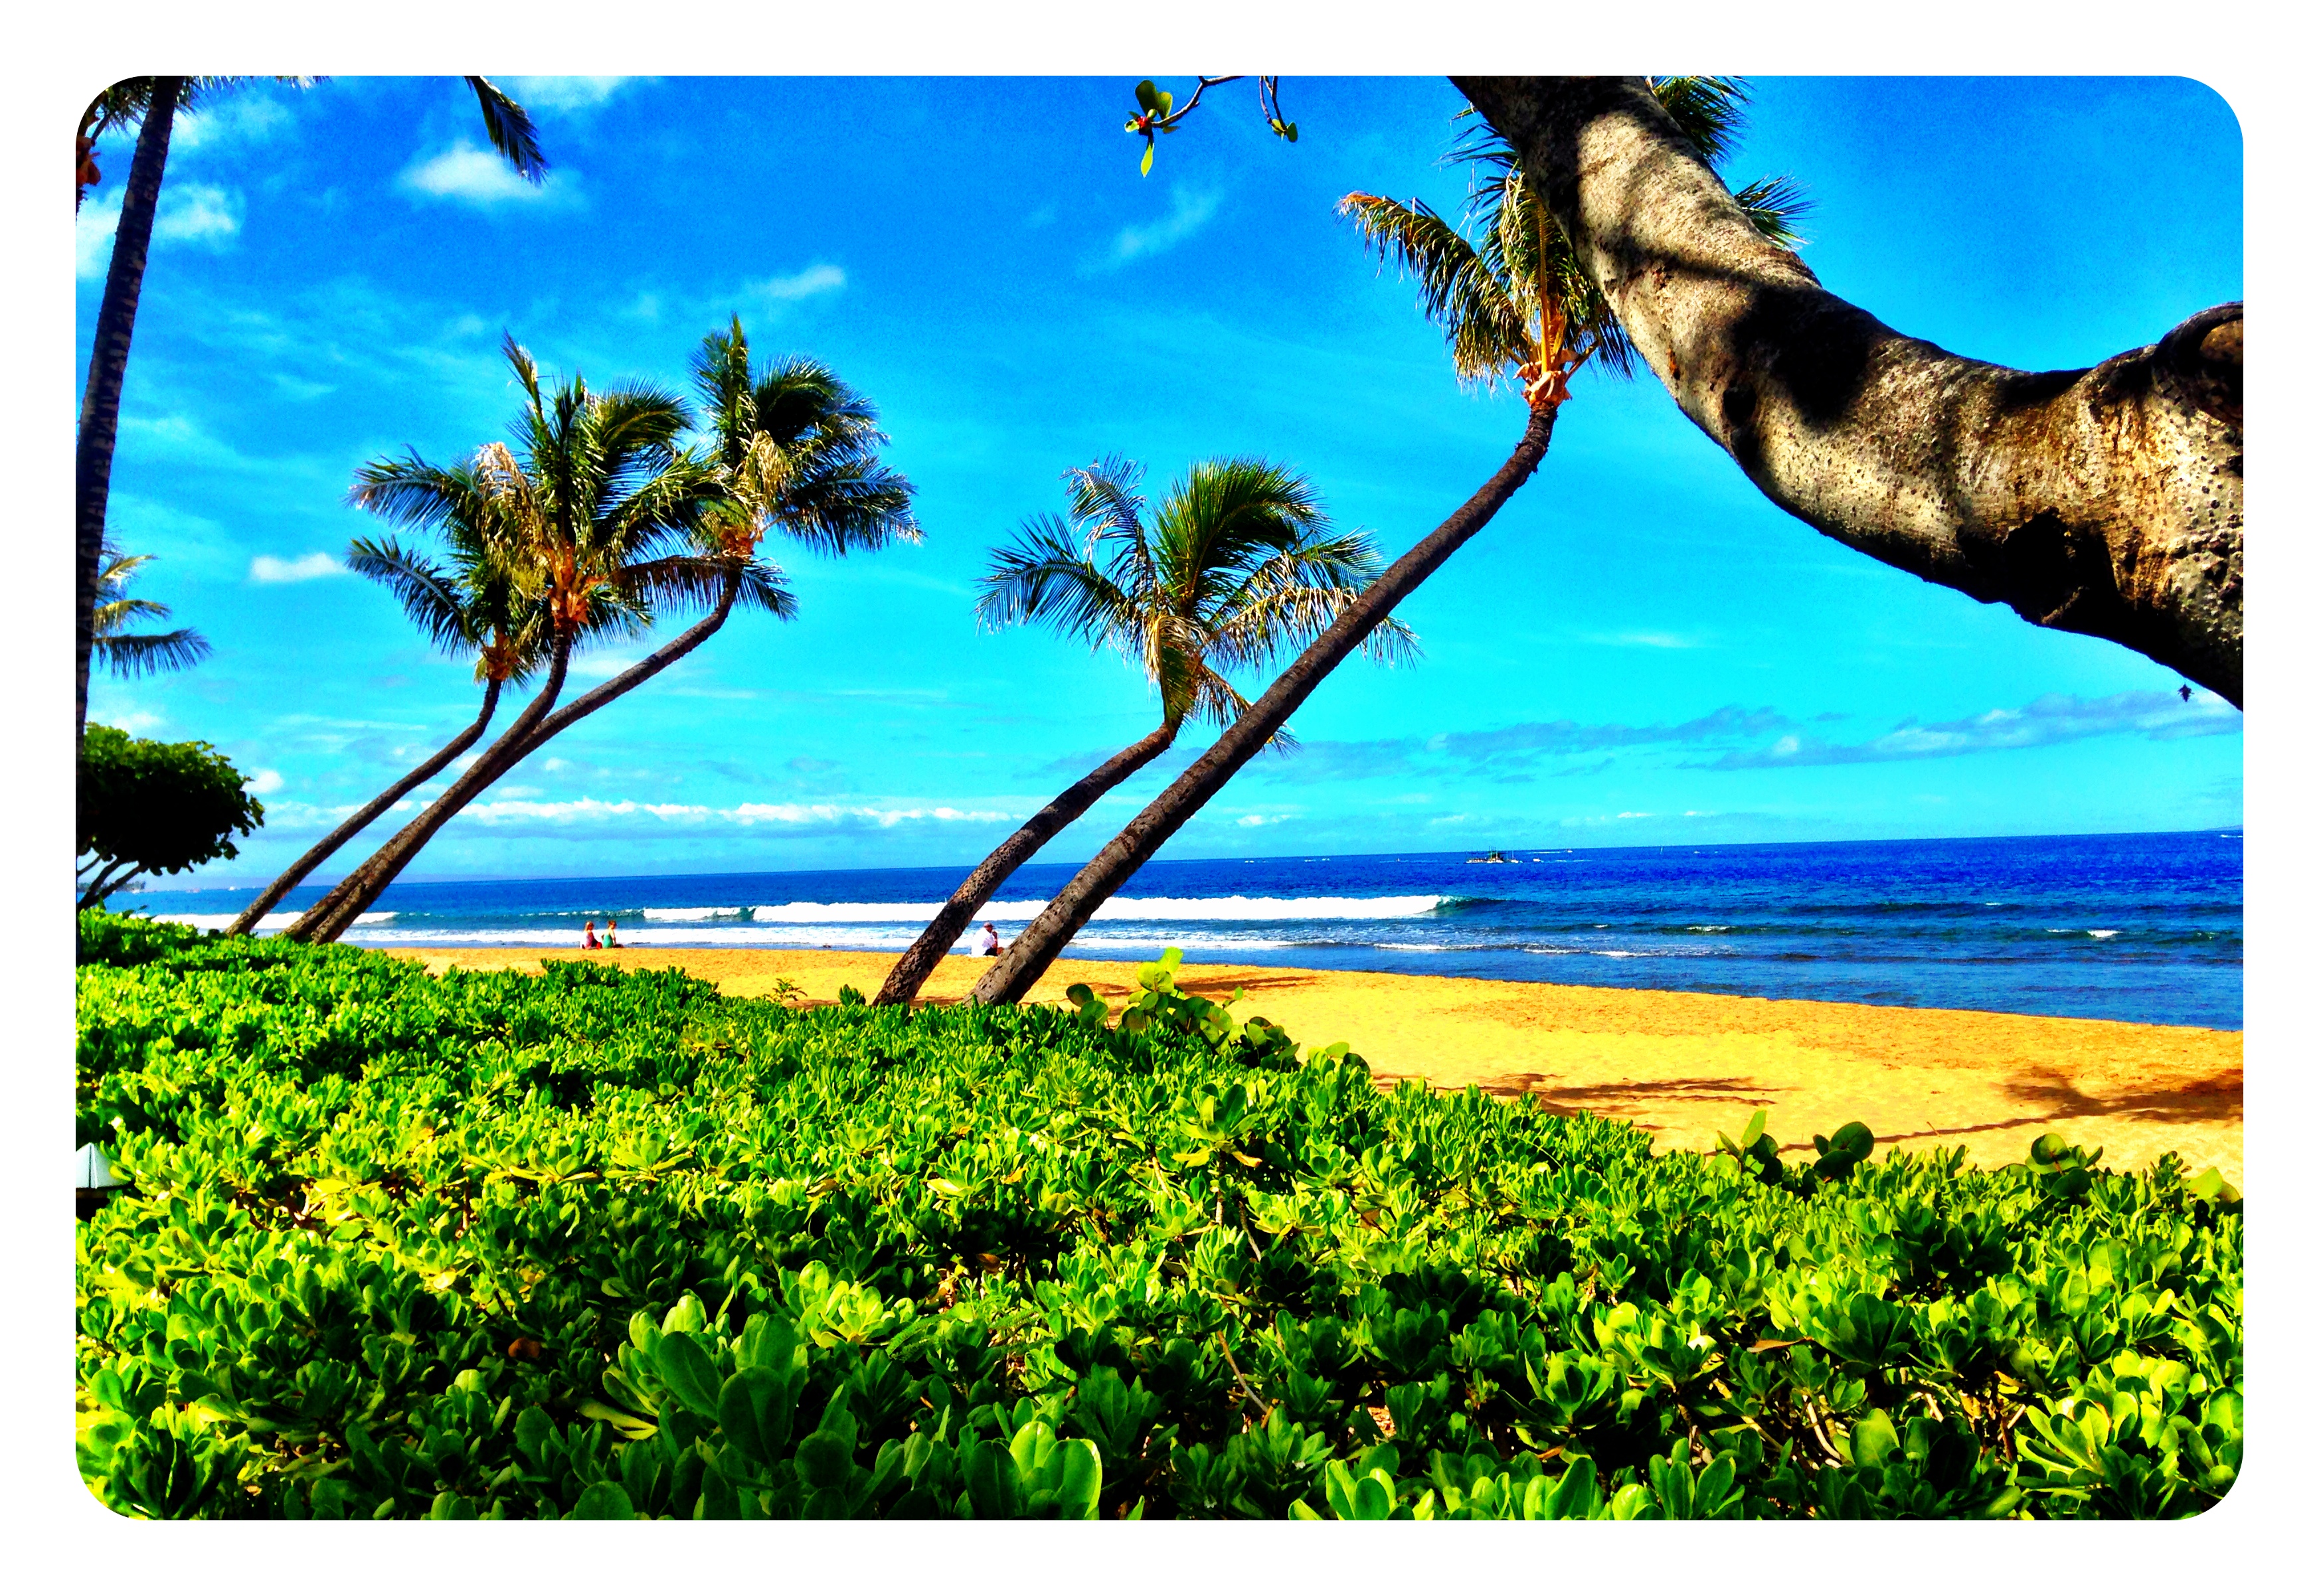 Our Shoreline SNUBA Experience in Kaanapali Beach in Maui Hawaii